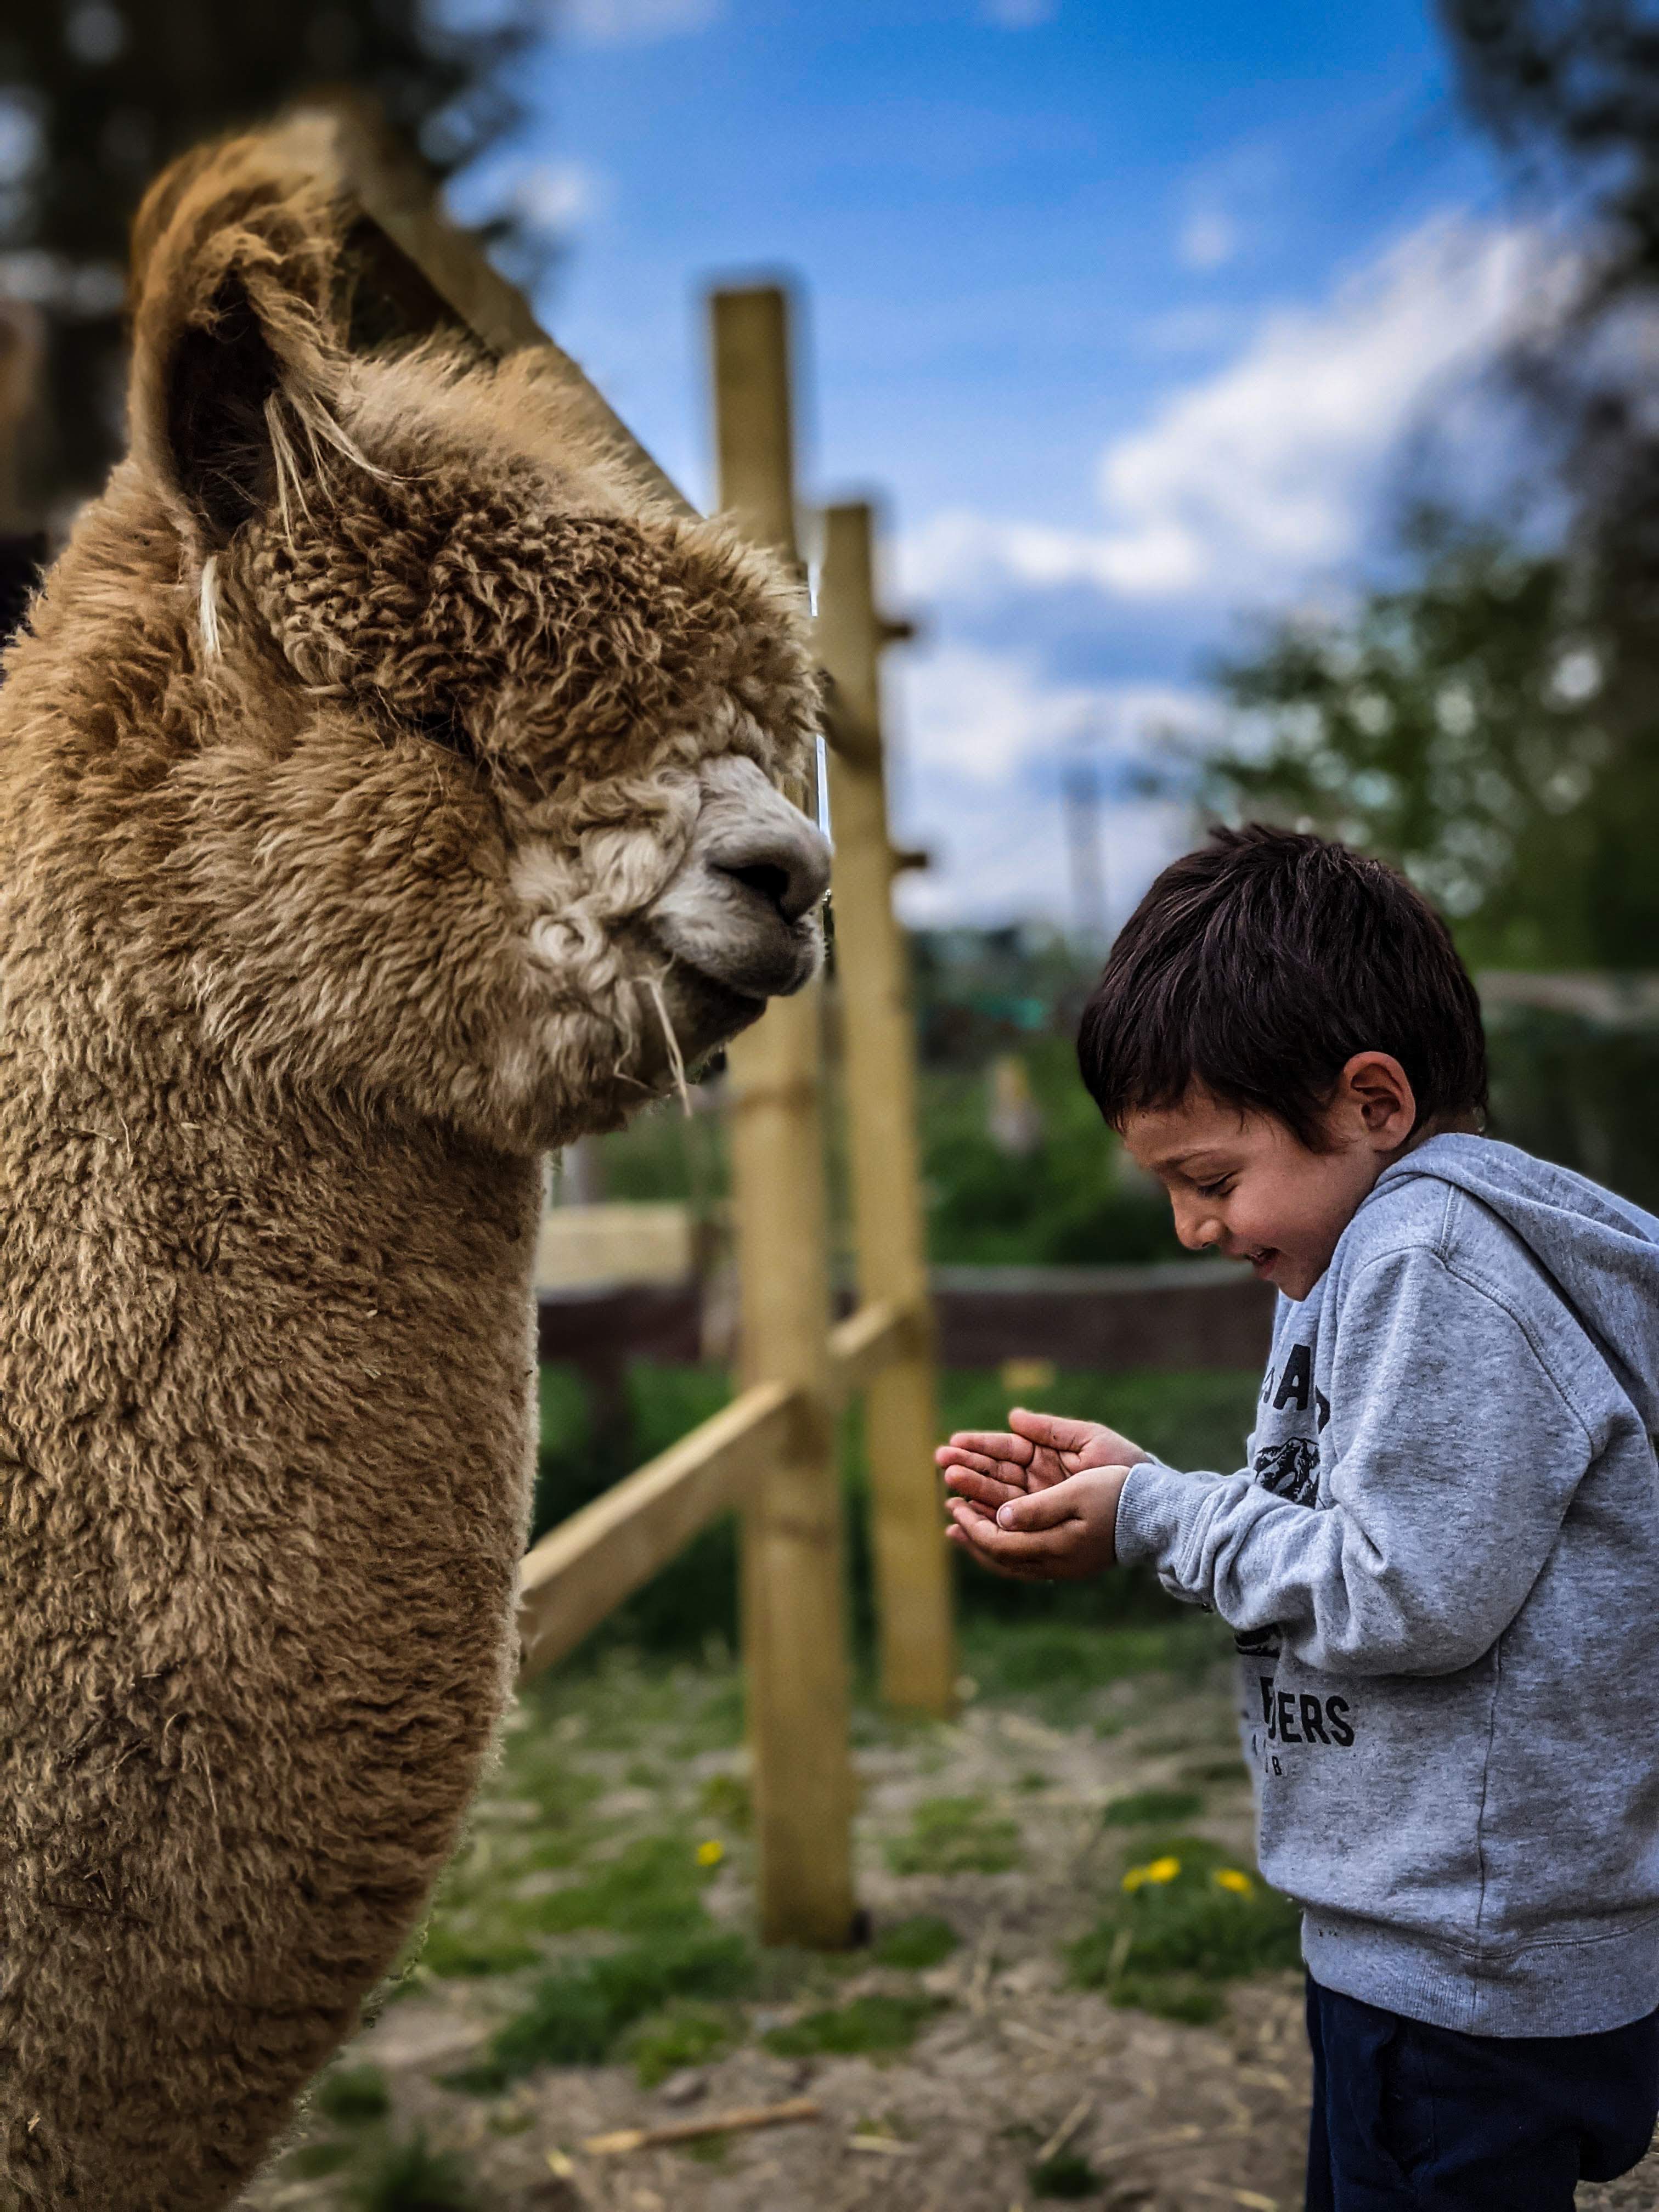 World Wild Schooling - https://worldwildschooling.com Sint Alpaca Rode - https://worldwildschooling.com/sint-alpaca-rode/